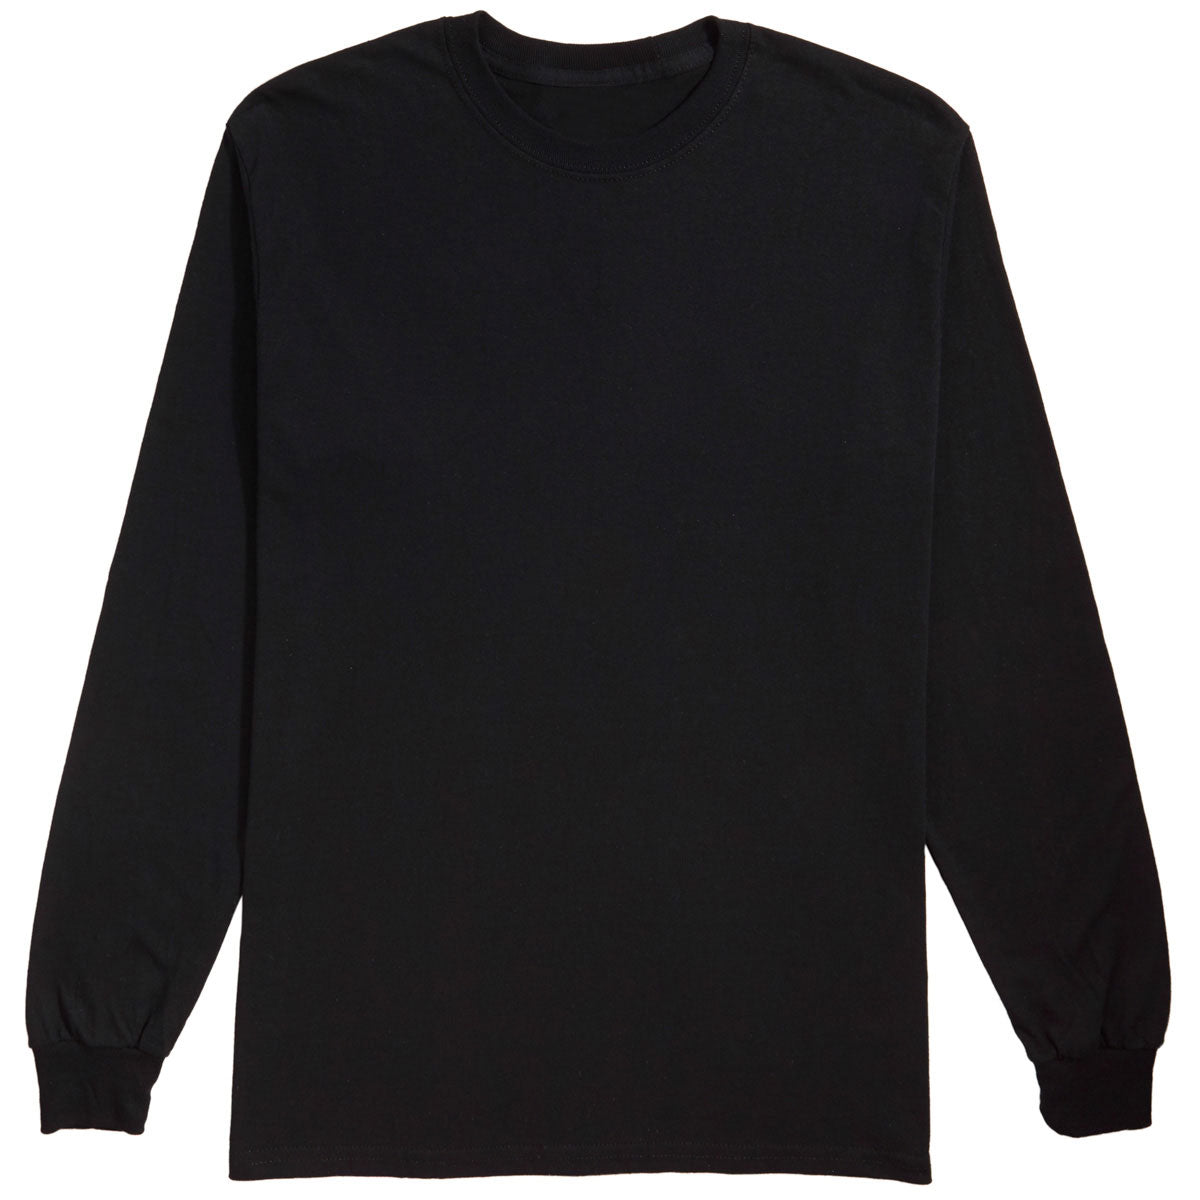 Converse Mouse Long Sleeve T-Shirt - Black - XL image 1